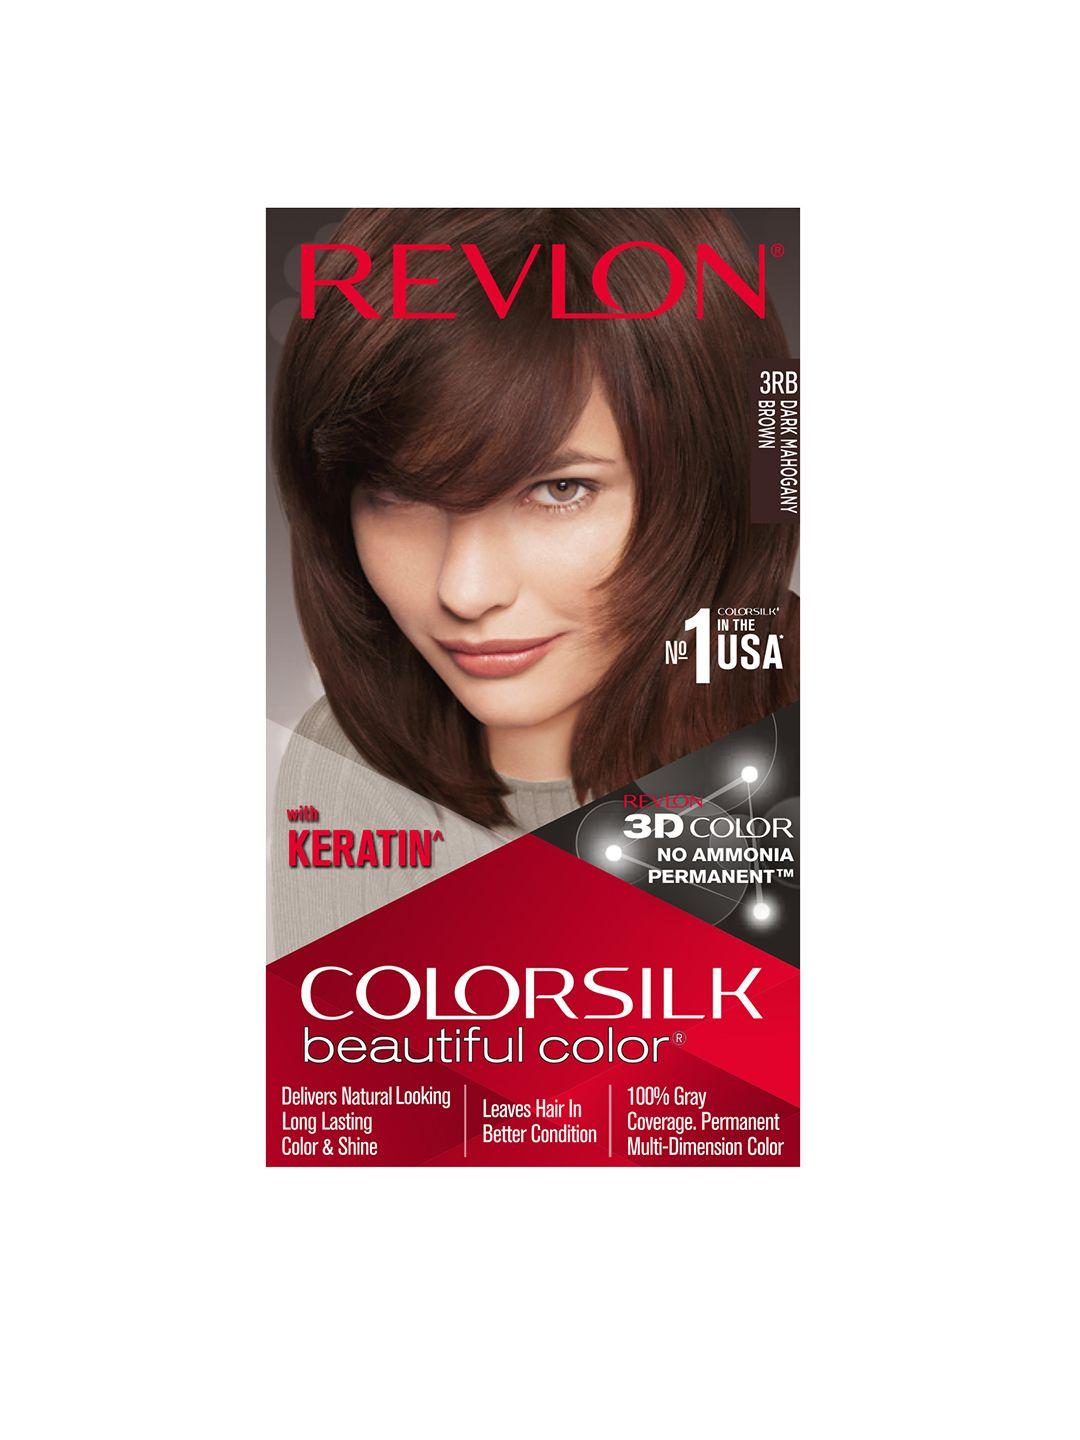 revlon color silk hair color with keratin - dark mahogany brown 3rb